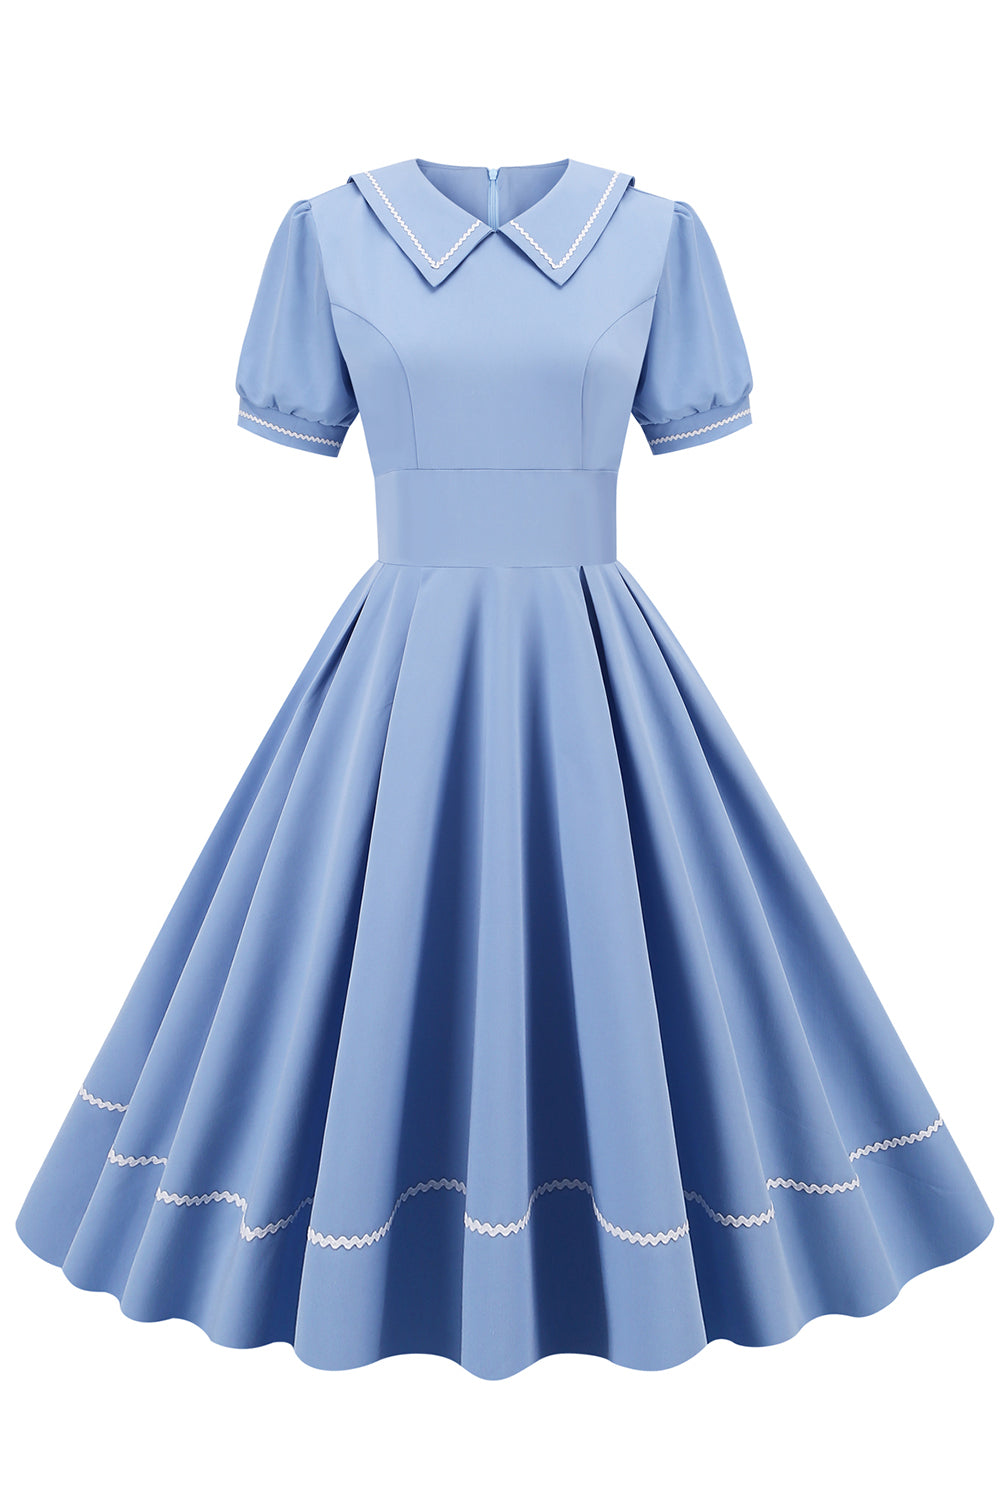 Zapaka Women Sky Blue 1950s Retro Style Vintage Dress Short Sleeves – ZAPAKA DA